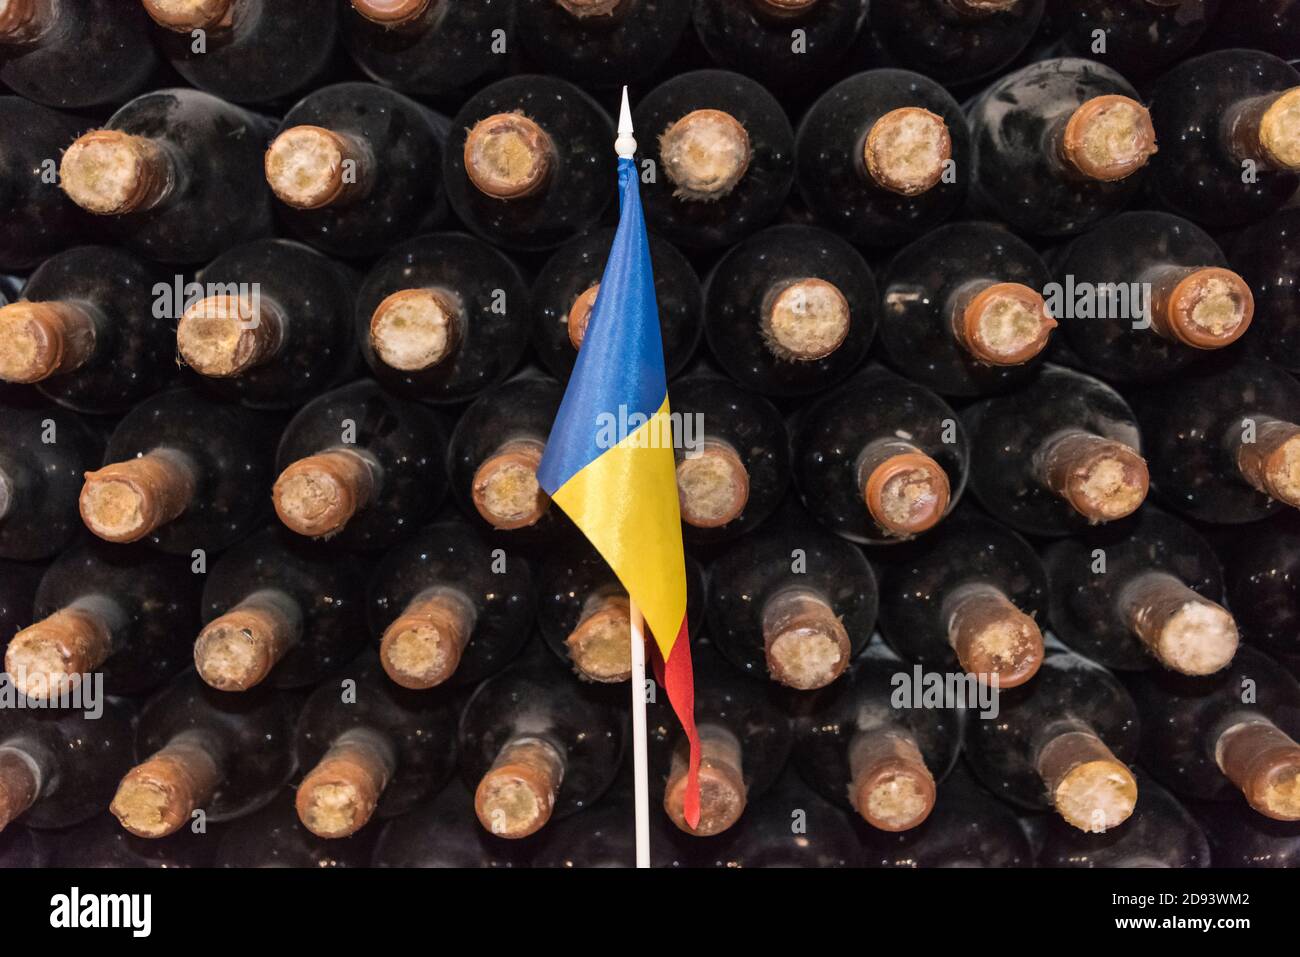 Bottiglie di vino nelle cantine sotterranee dell'azienda vinicola Cricova, Chisinau, Moldavia Foto Stock